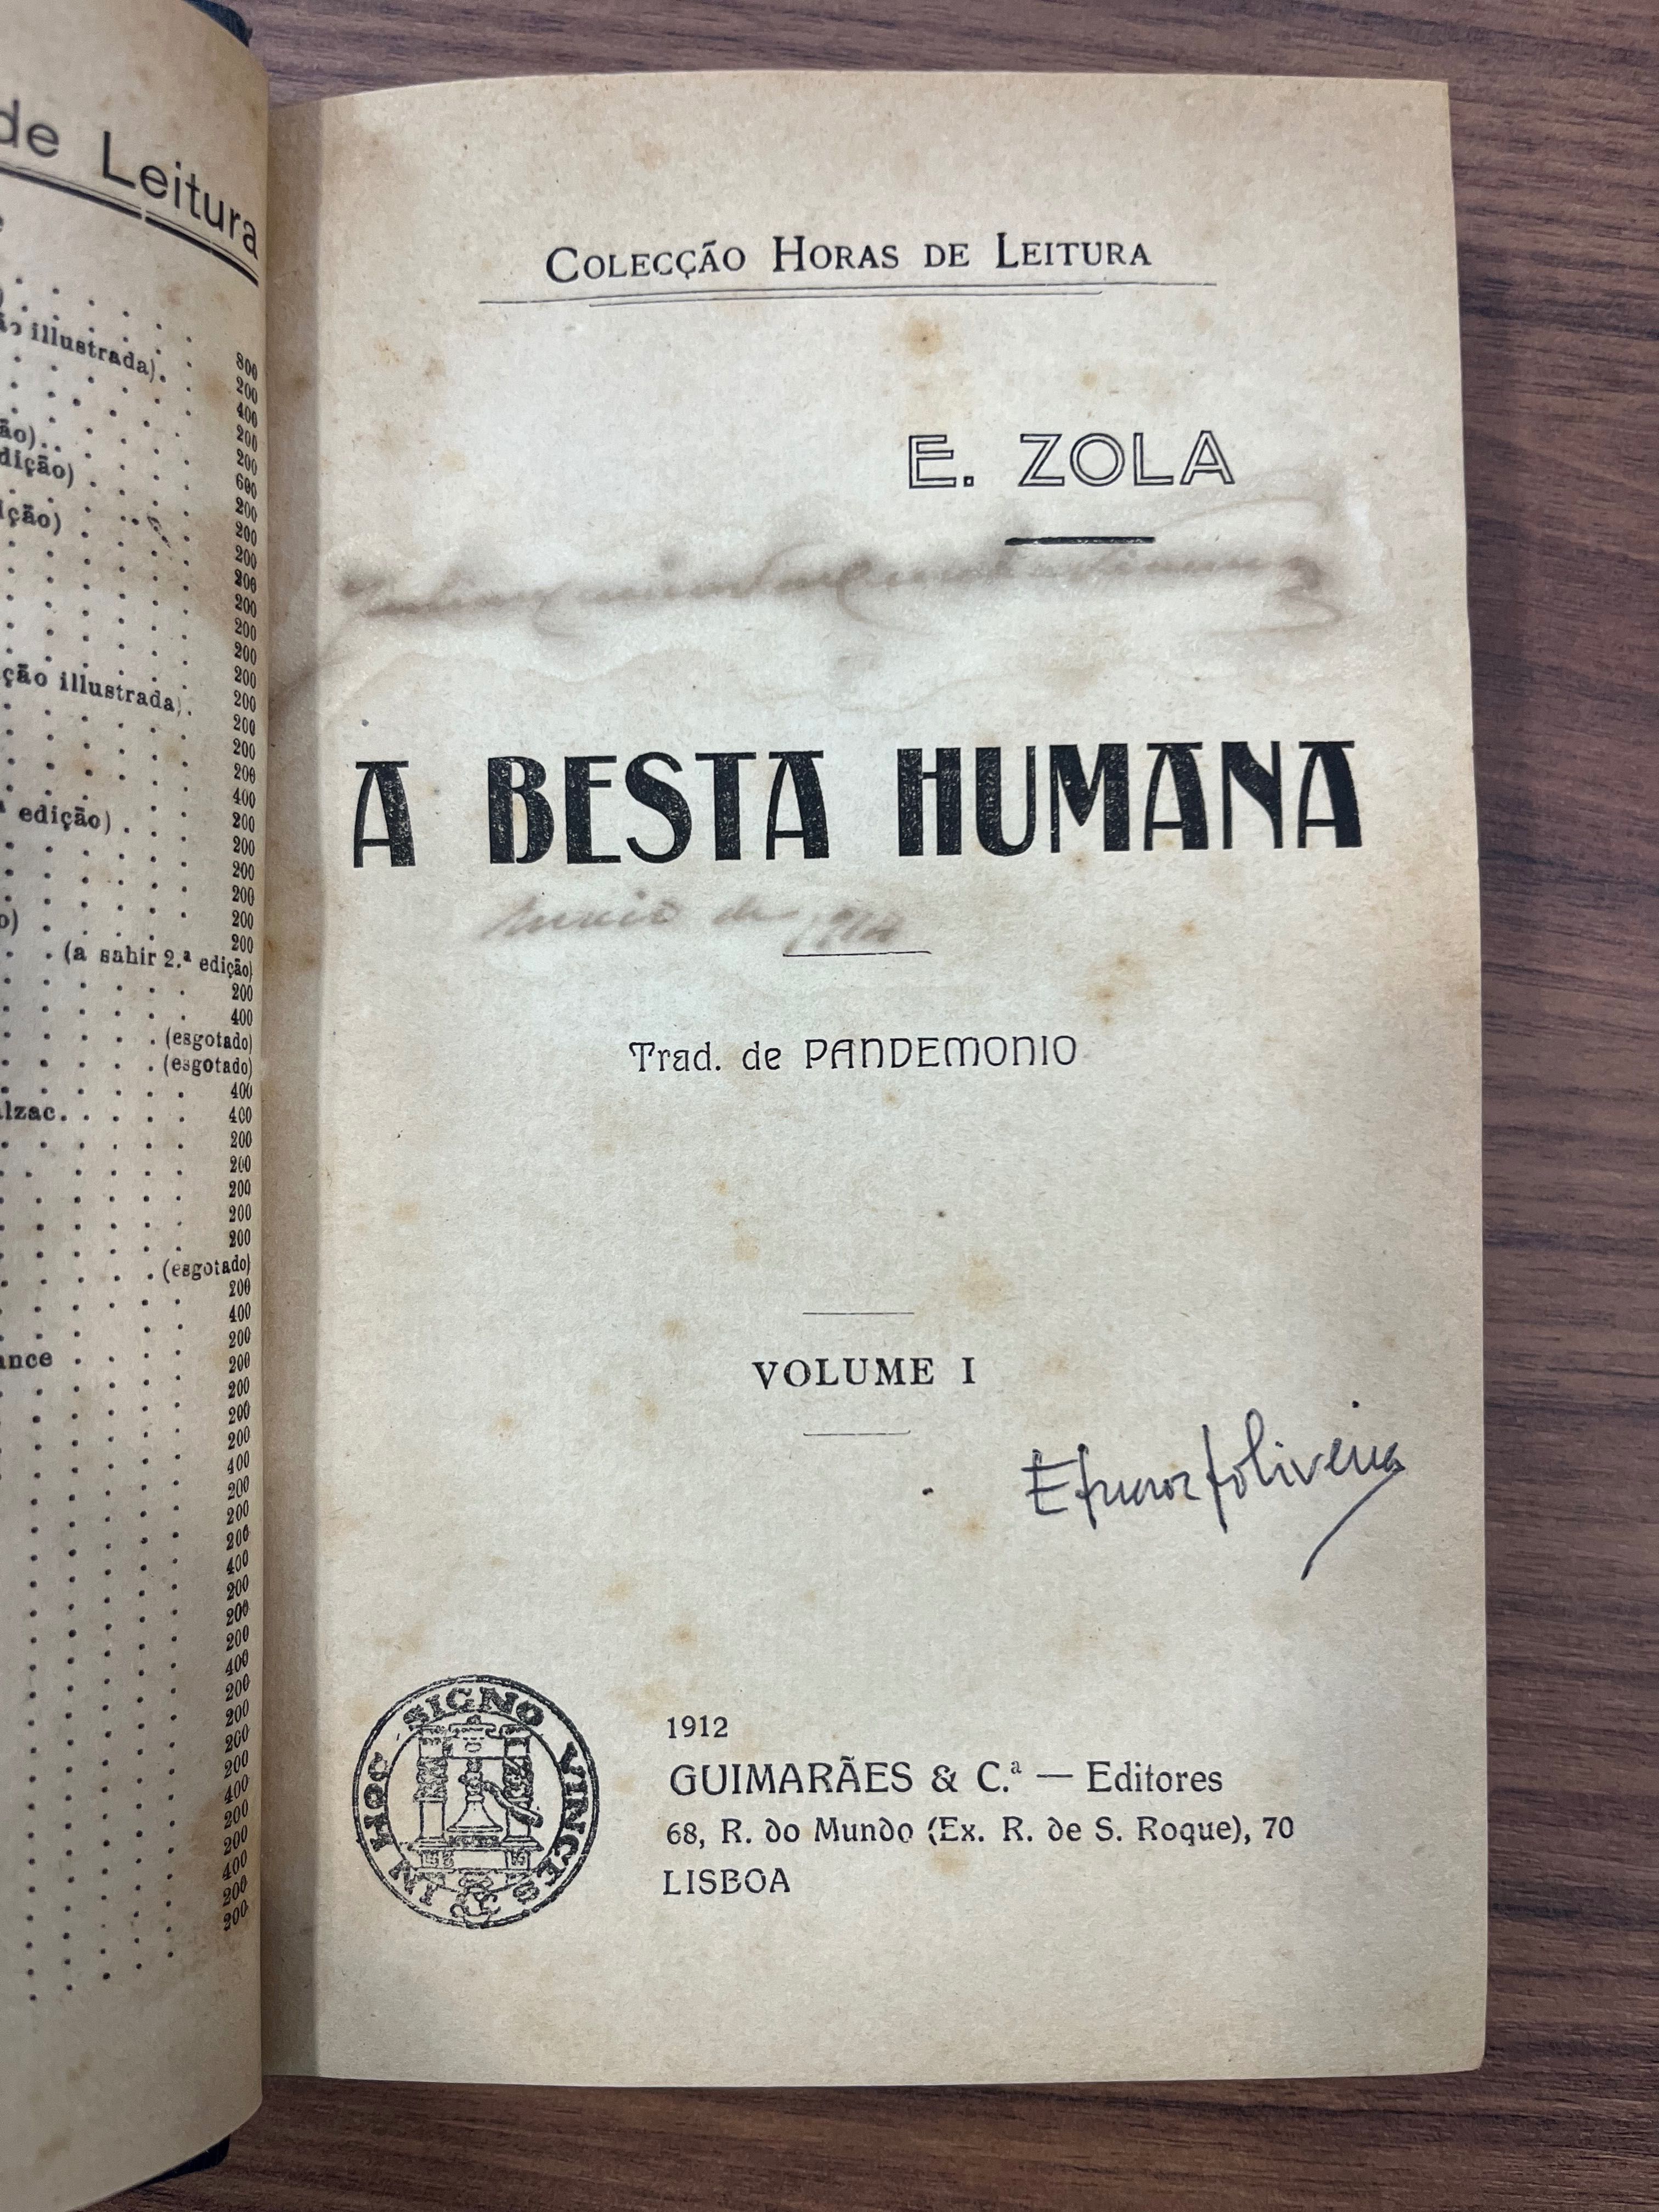 Obras de Émile Zola